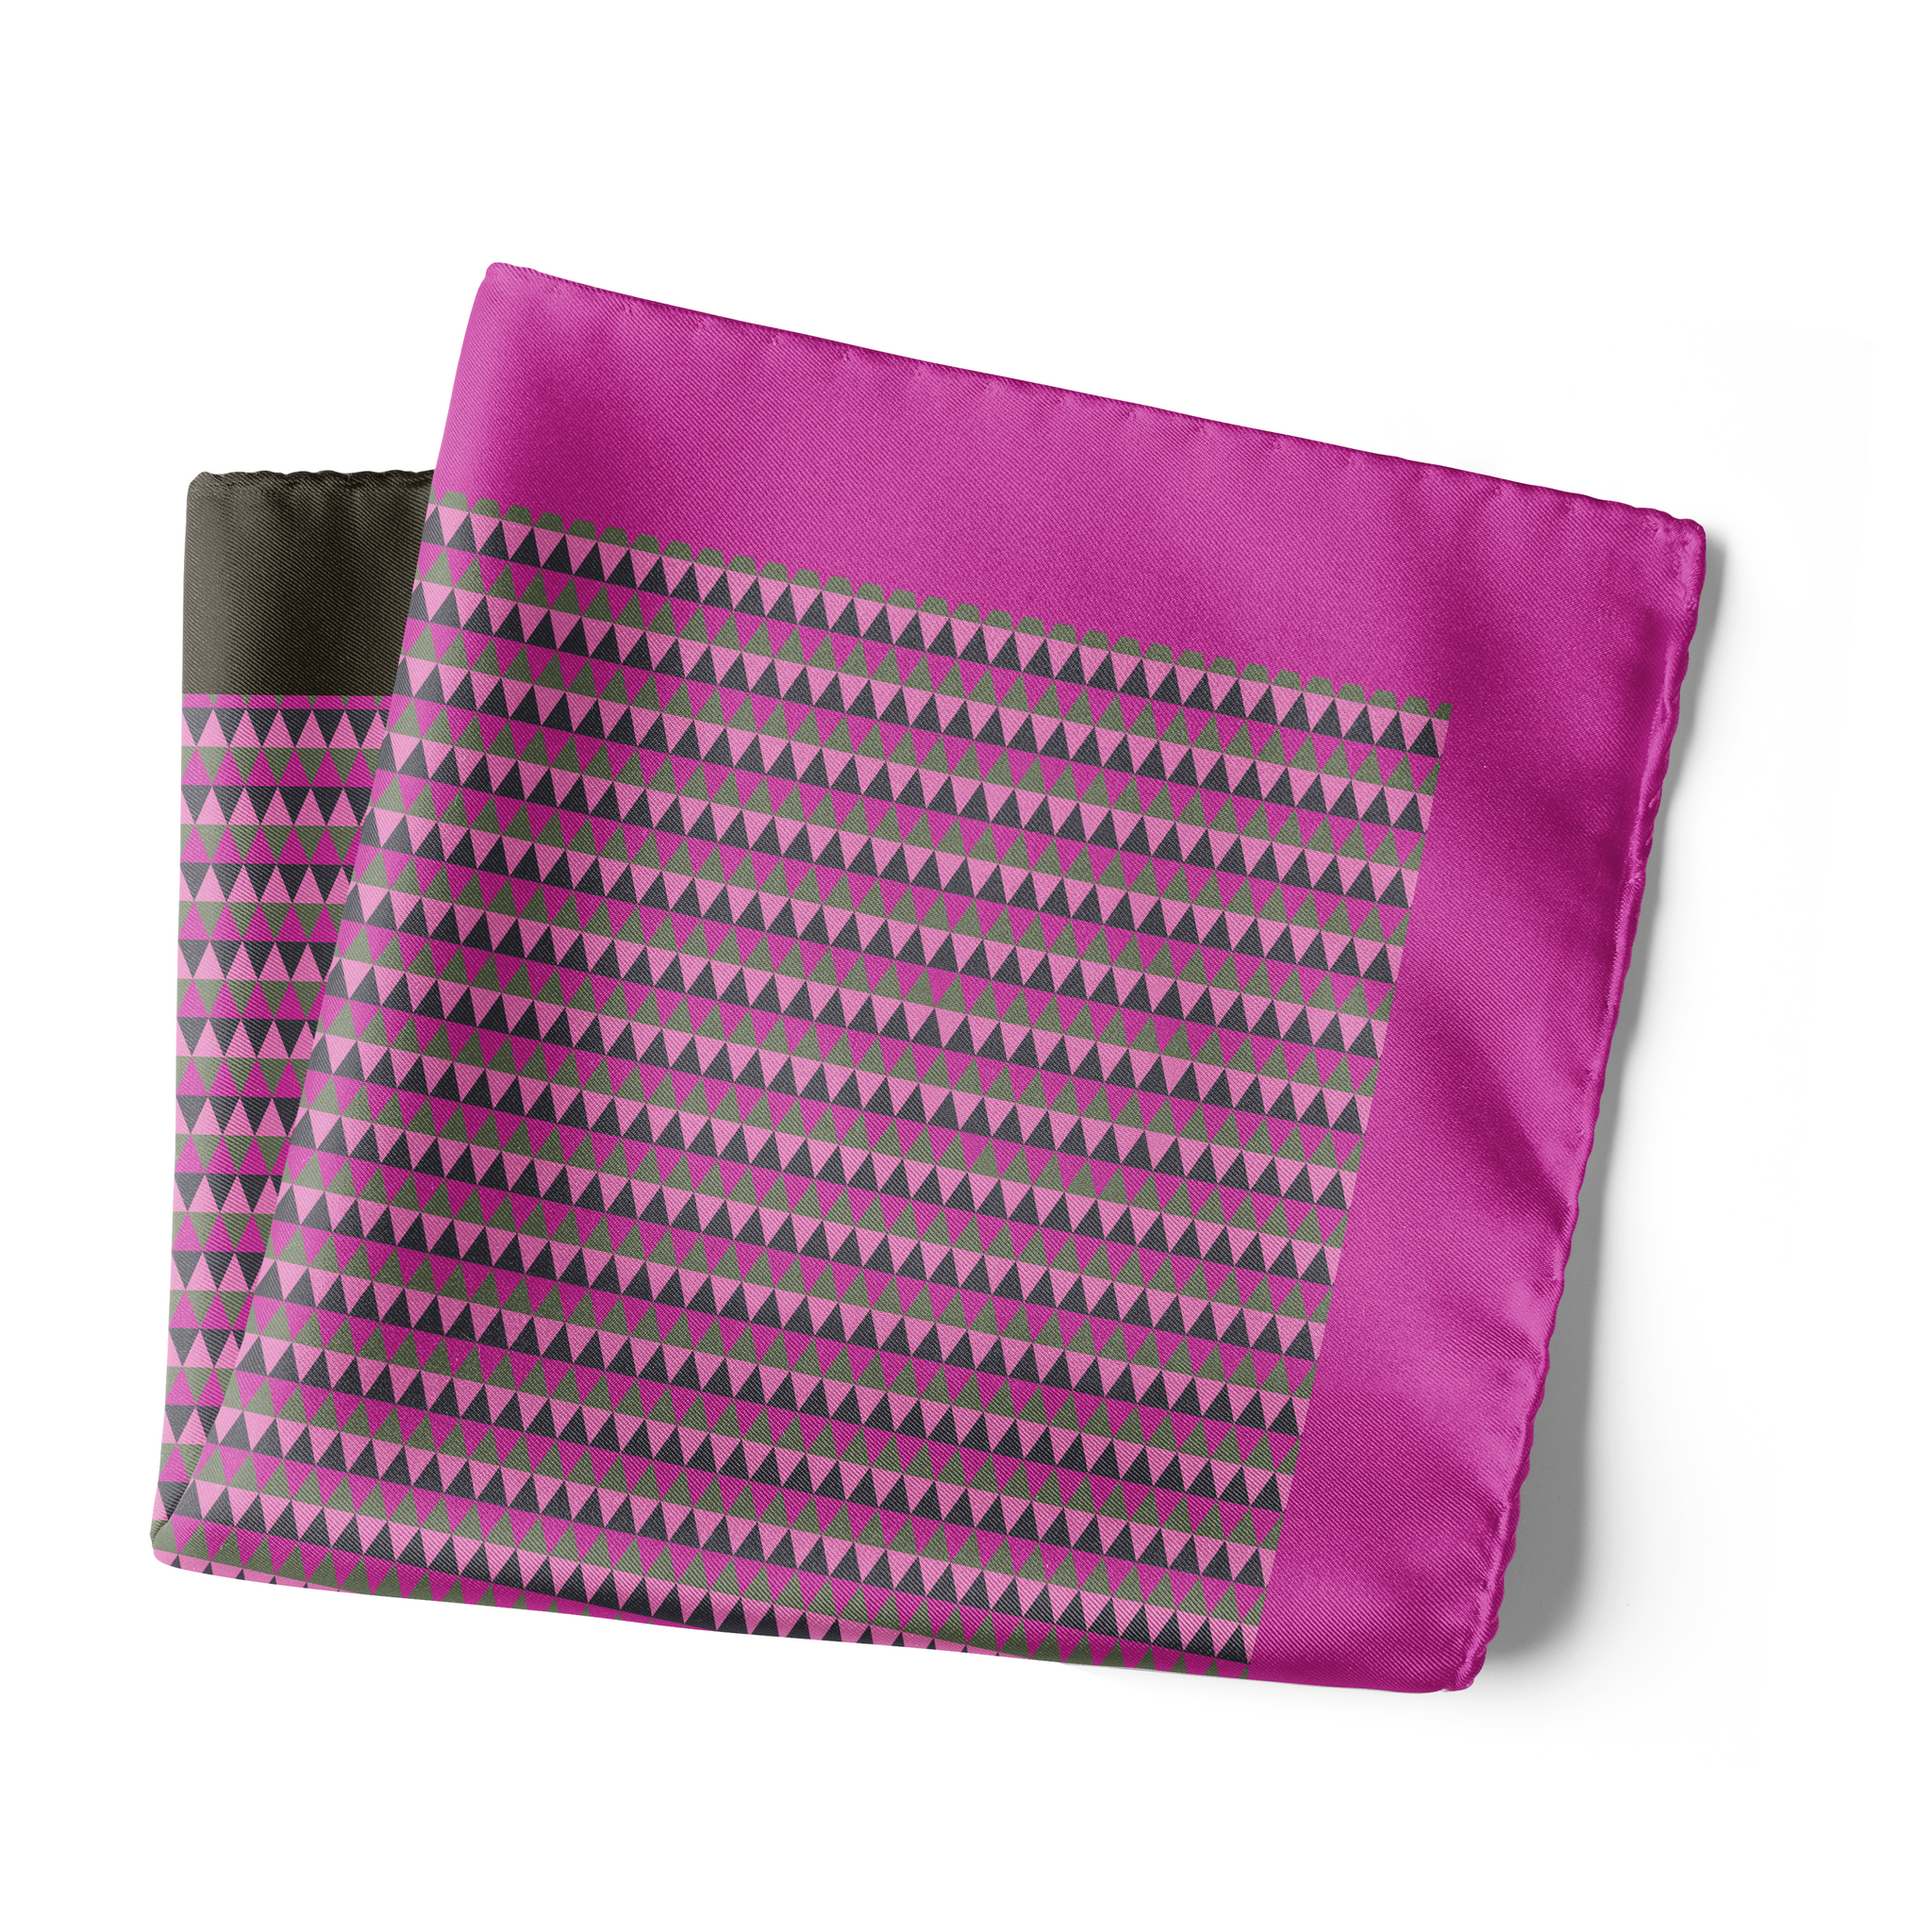 Chokore Purple & Grey Silk Pocket Square from the Plaids line